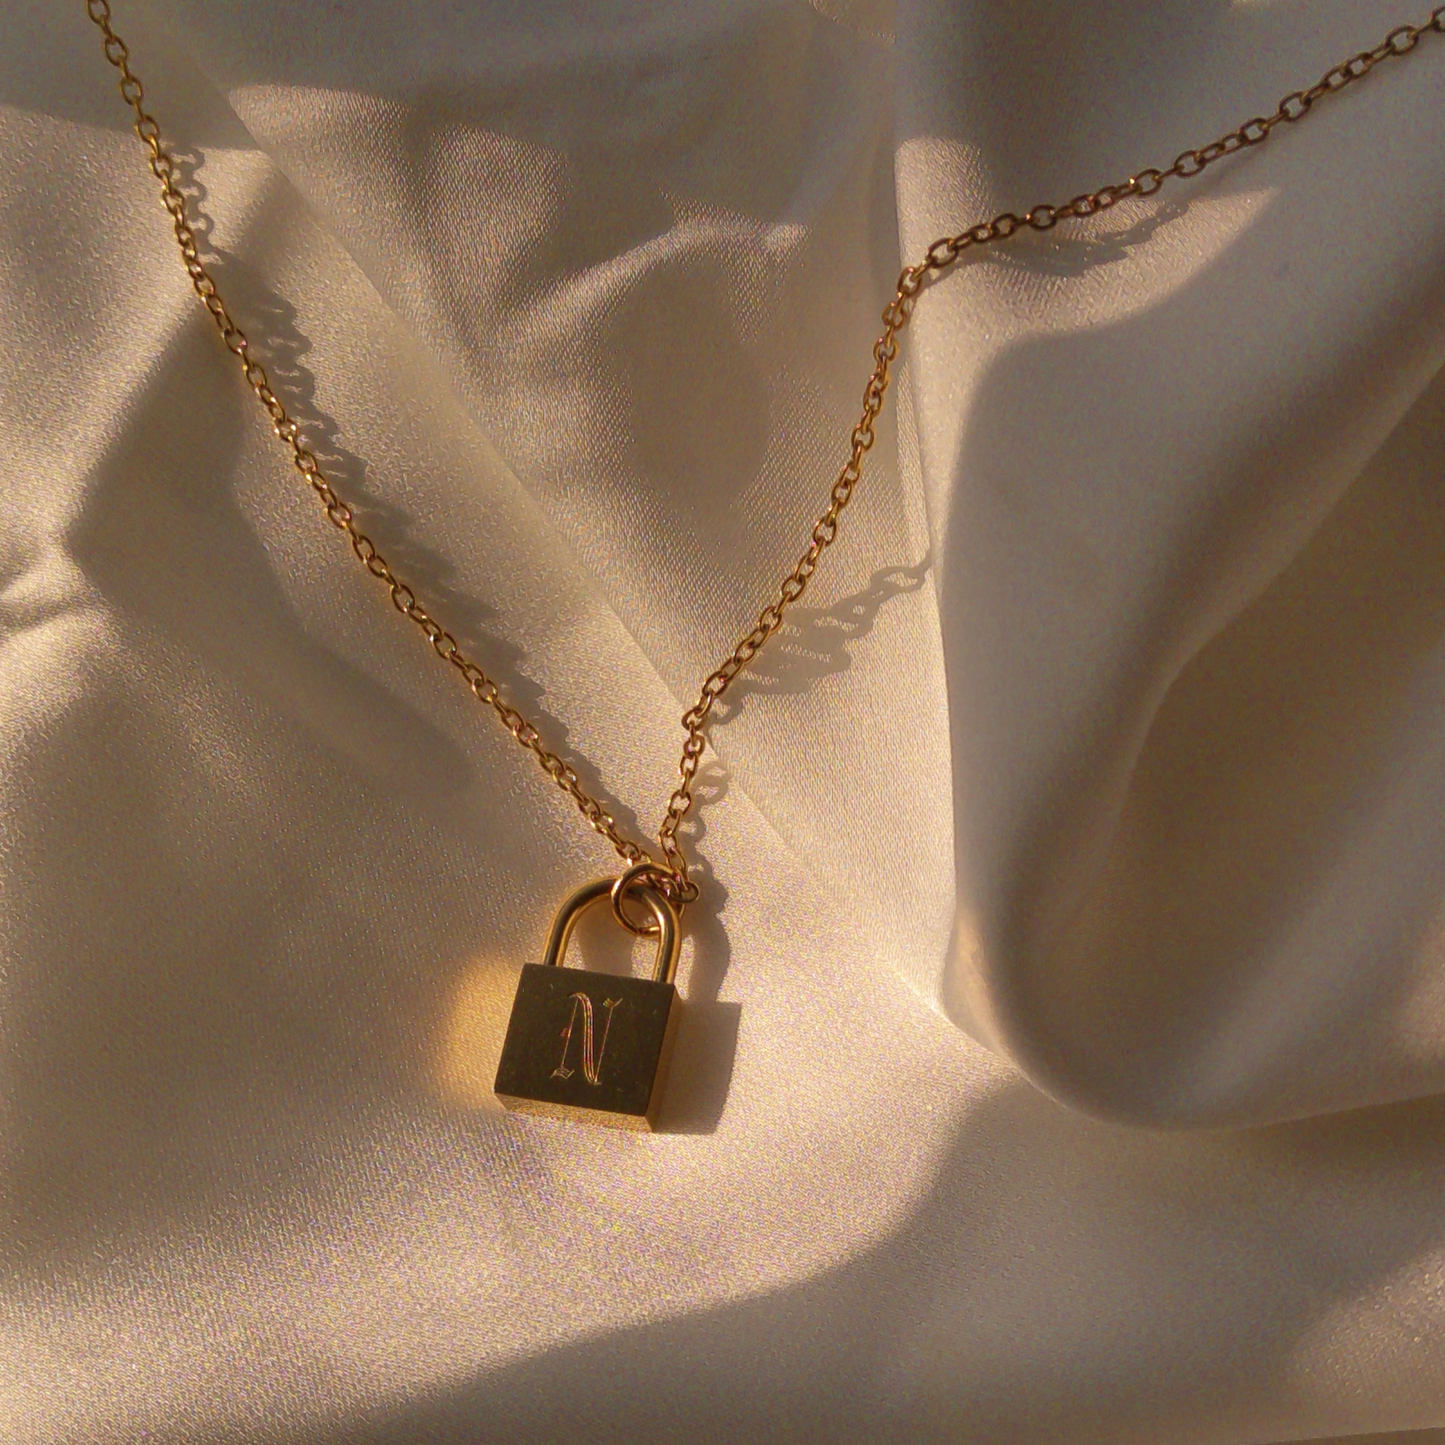 nick sturniolo inspired lock necklace